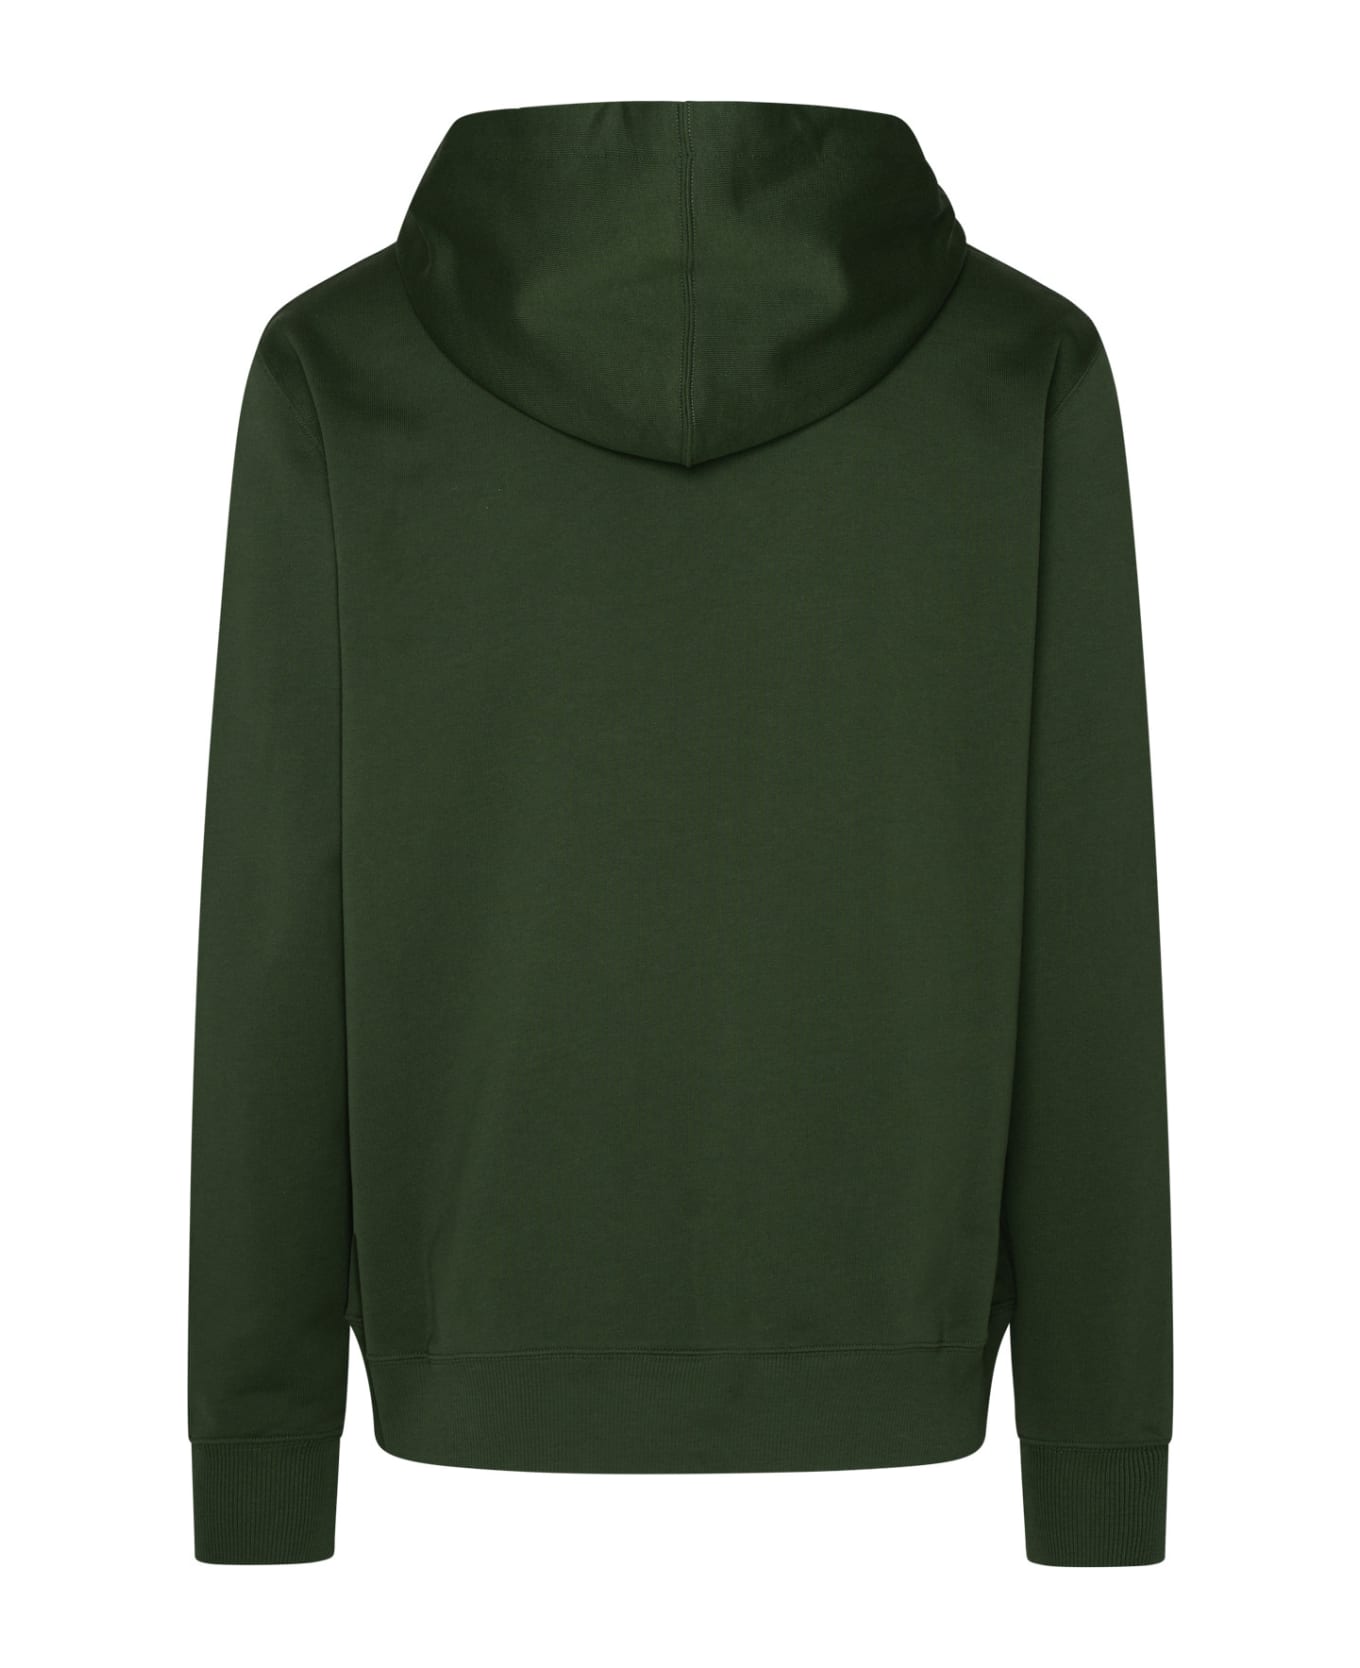 Etro Green Cotton Sweatshirt - Green